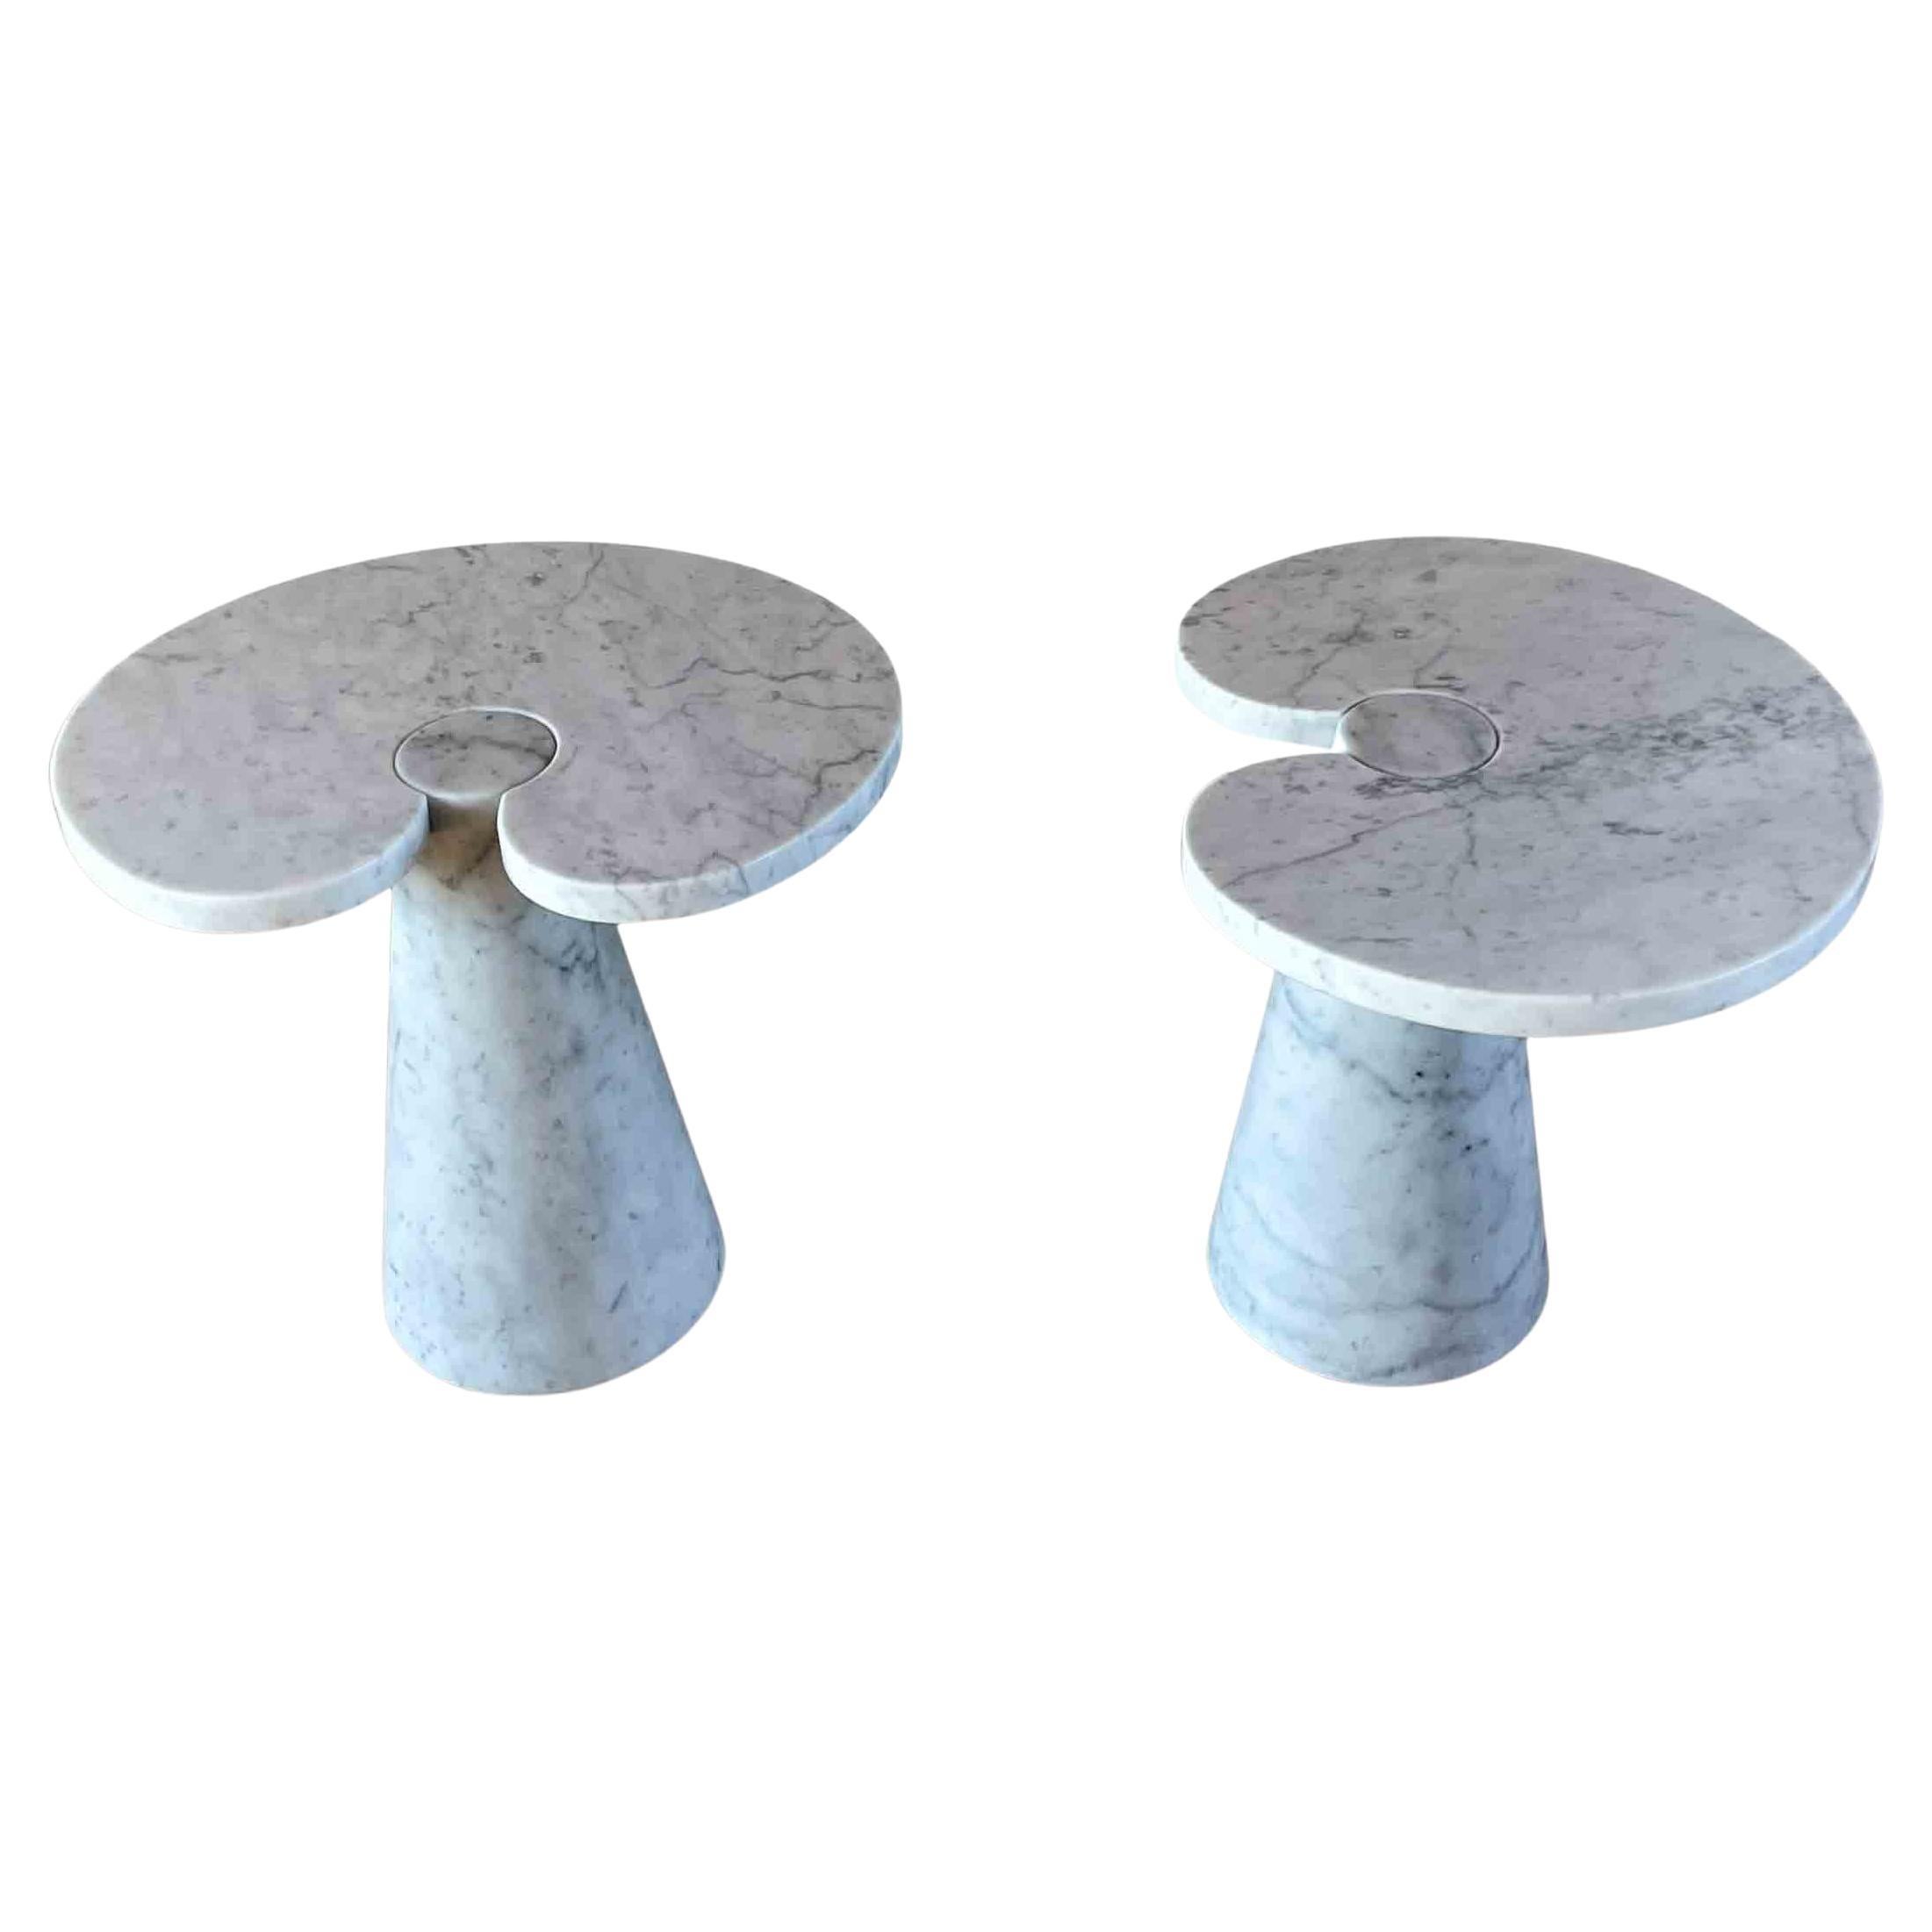 Angelo Mangiarotti Carrara Marble “Eros” Side Table for Skipper, 1971, Set of 2